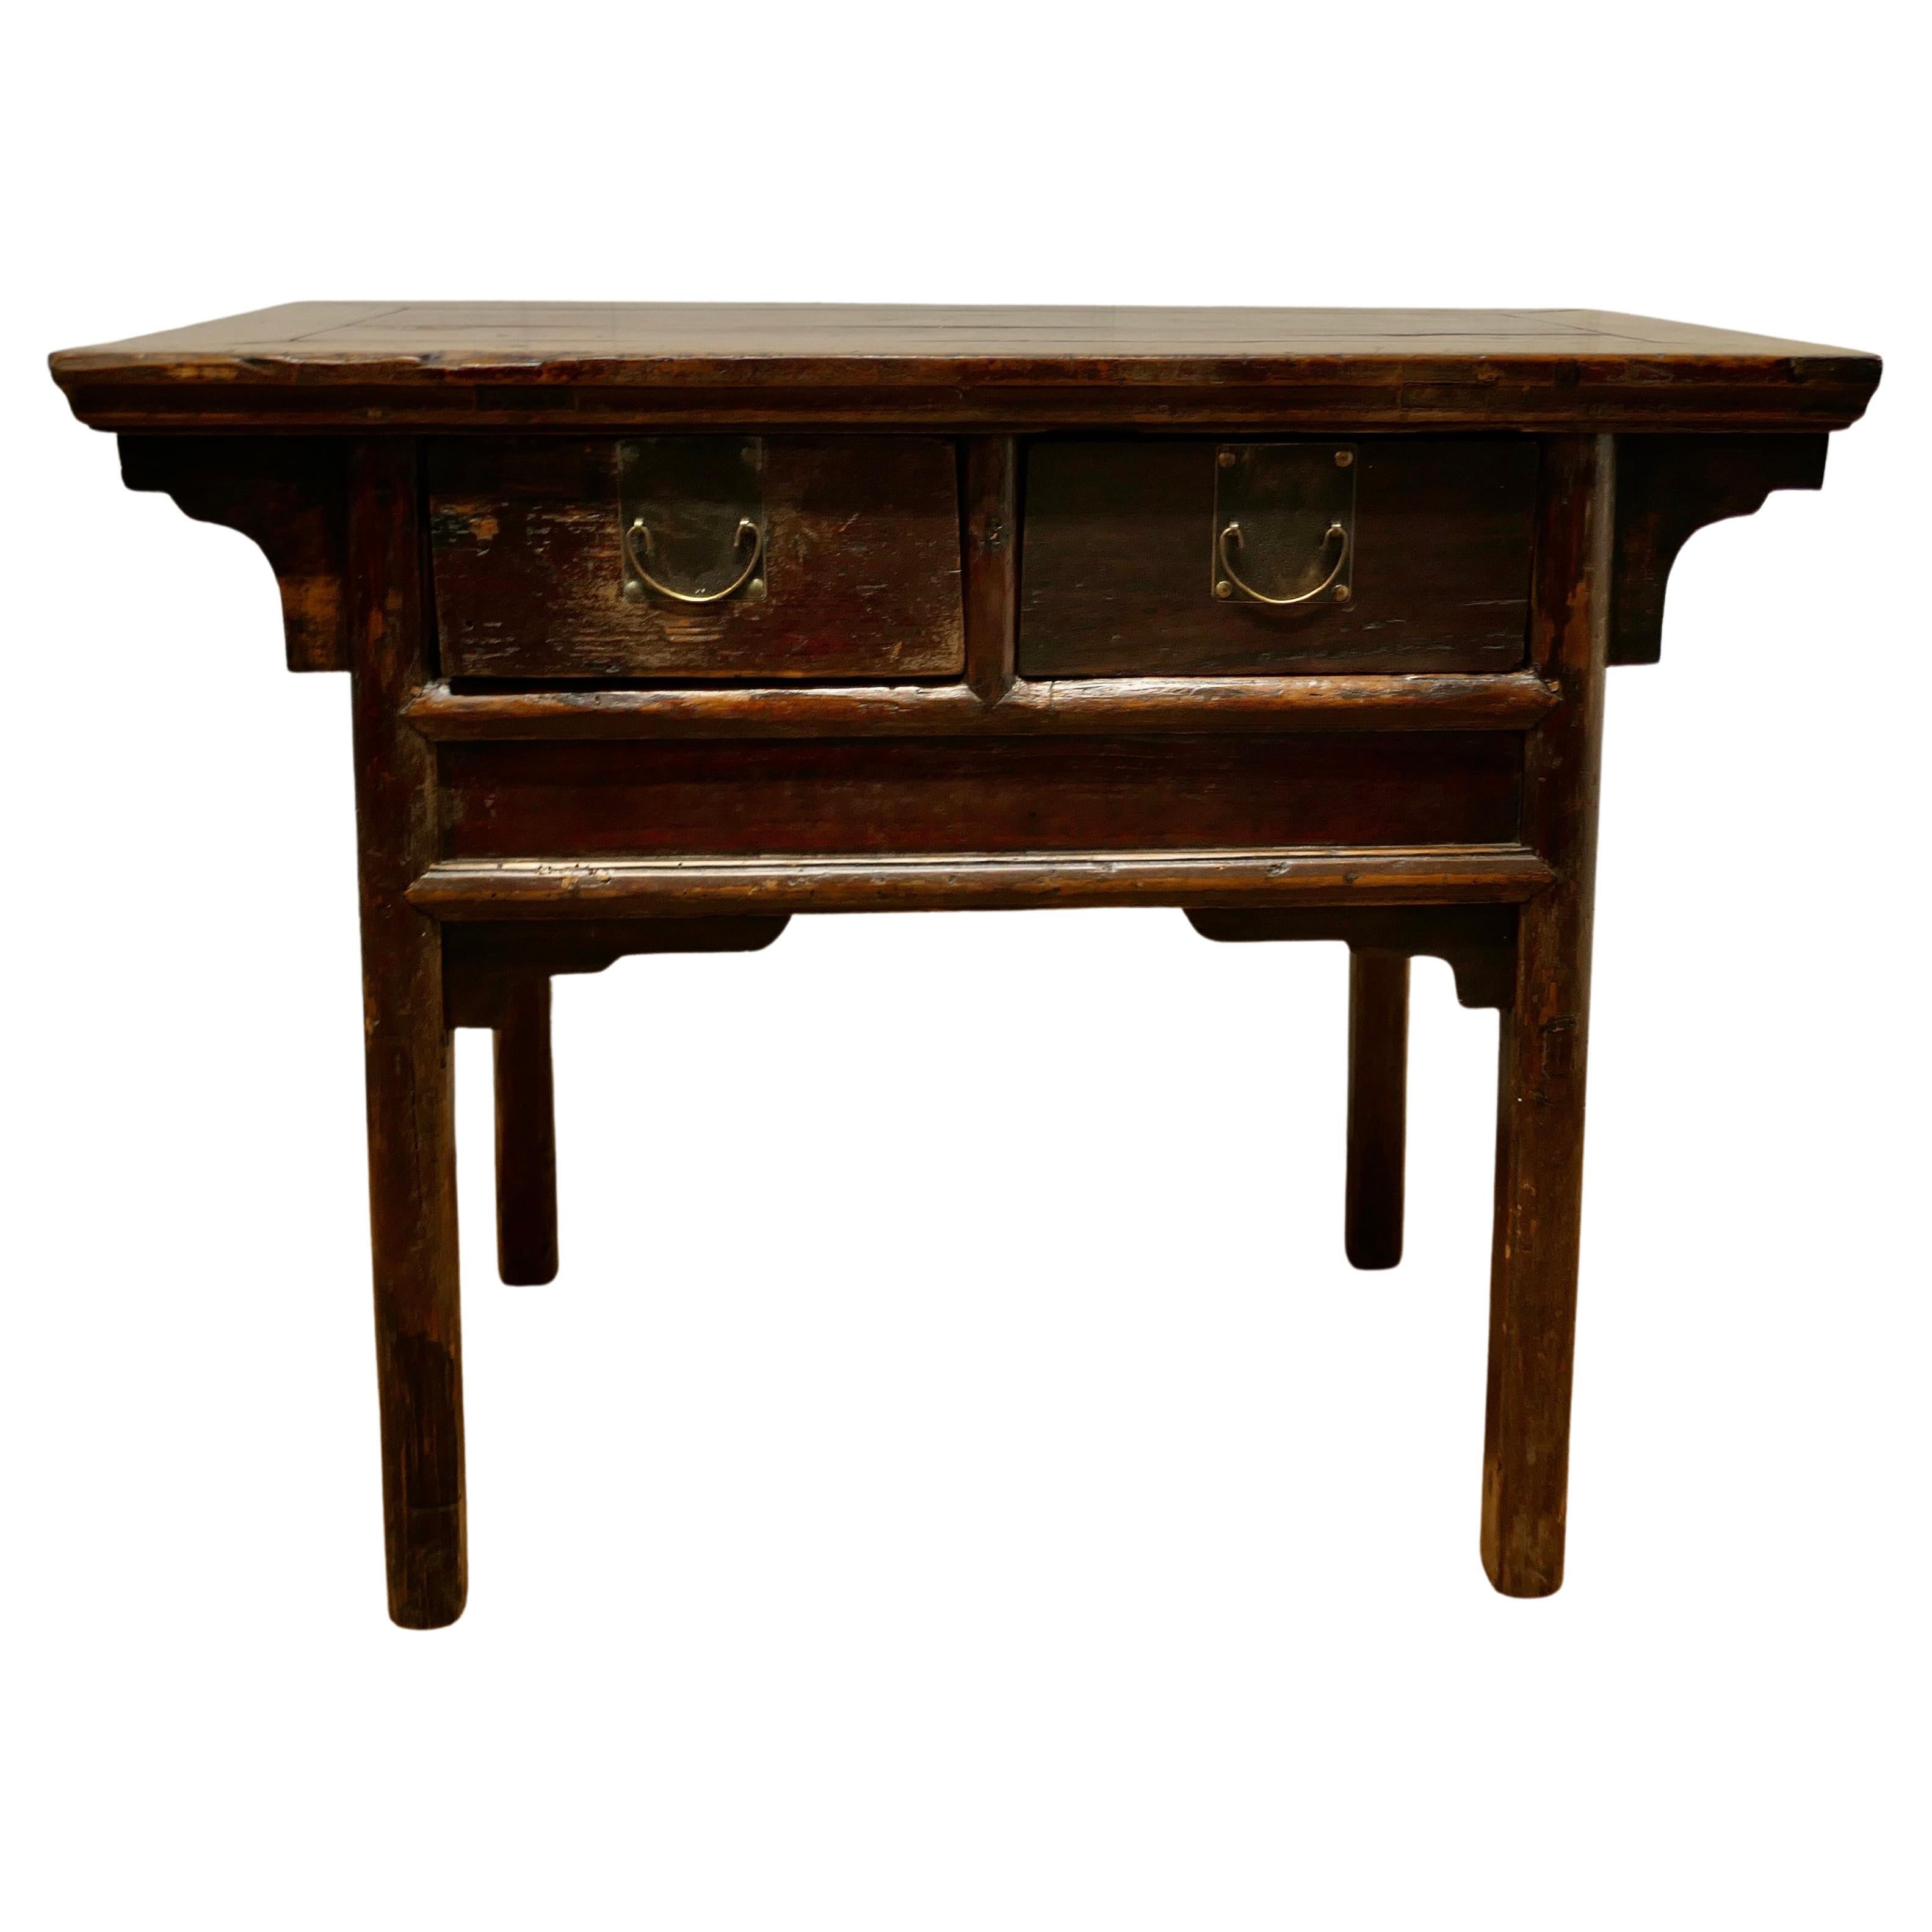 Oriental Deep Side Table or Work Table